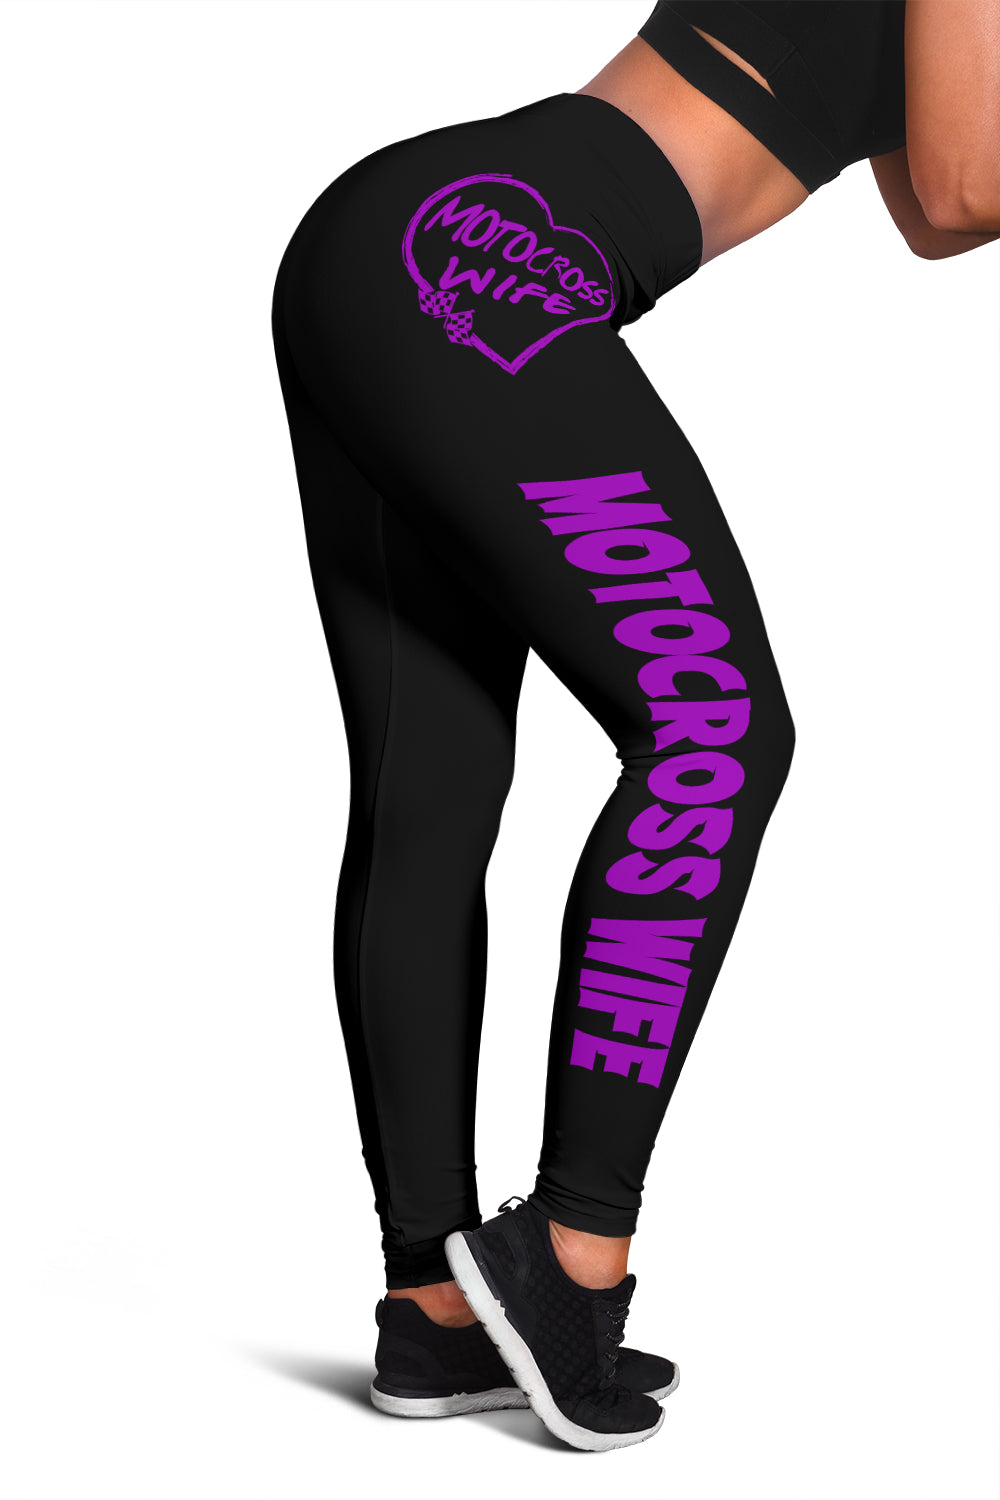 CUSTOM RACING LEGGINGS Black Pants Workout Yoga Side Team Pit Crew Last  Name Motocross Personalized Customized Printed Girl Wife Gift -   Australia